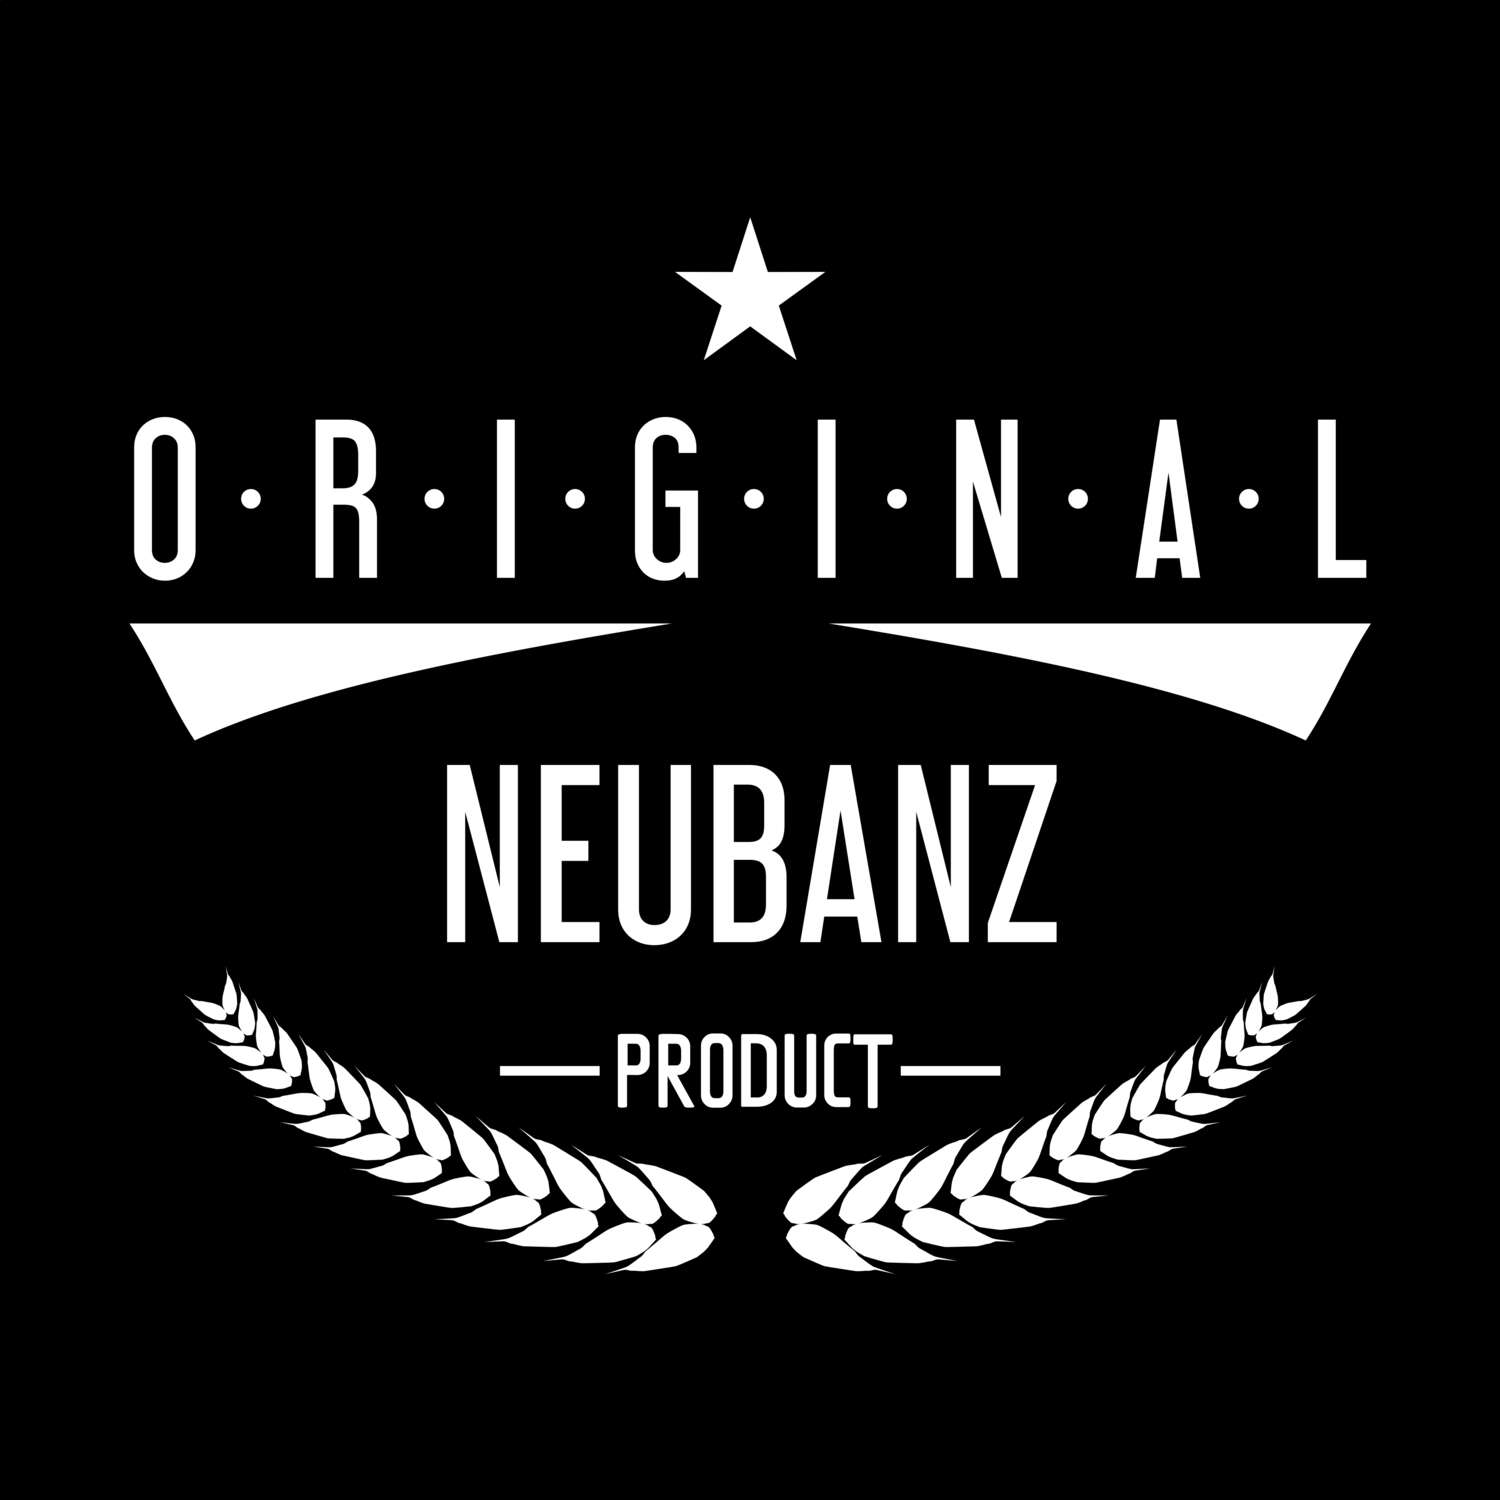 Neubanz T-Shirt »Original Product«